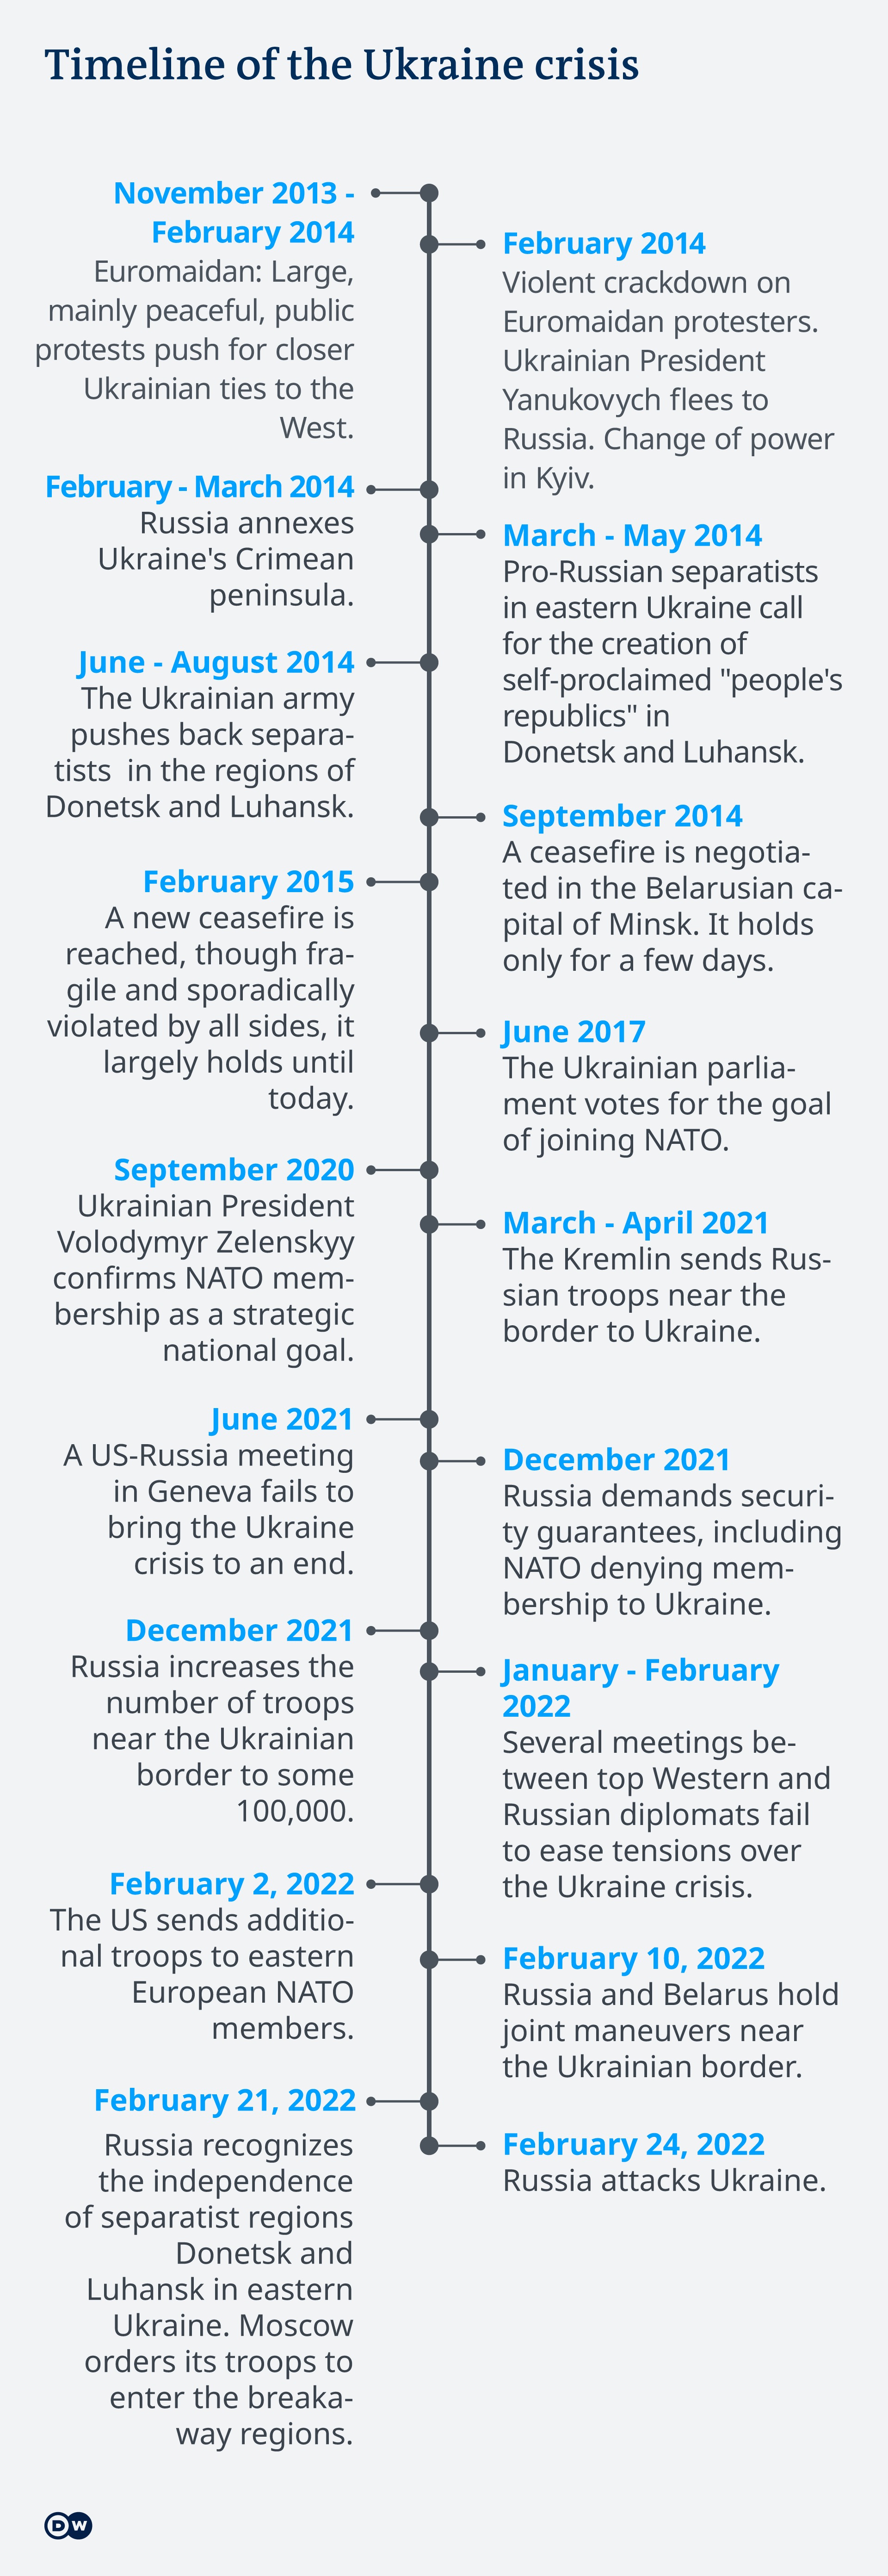 A timeline of the Ukraine crisis